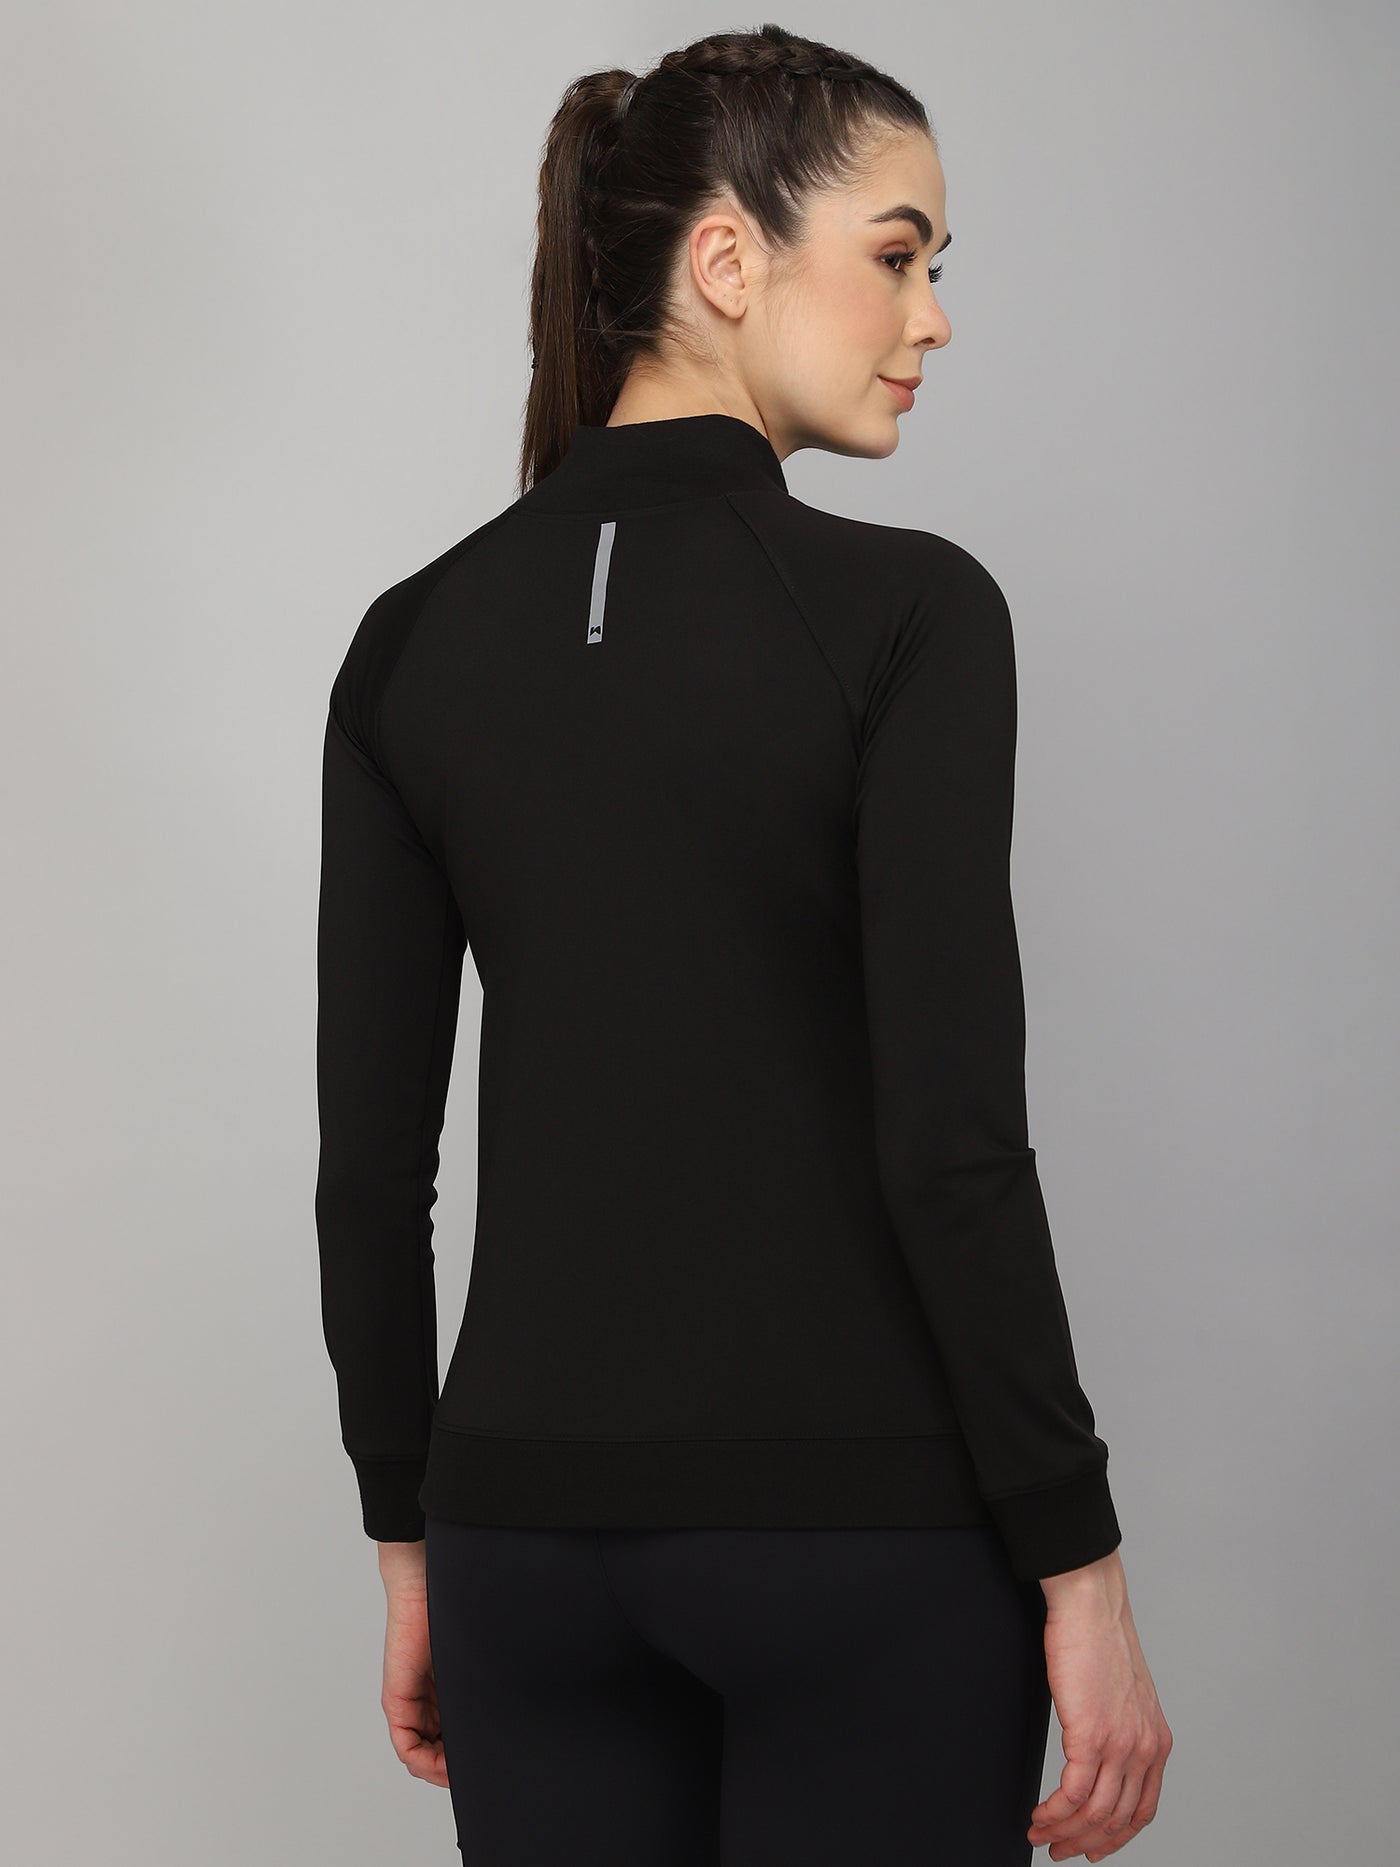 Bone Dry Yellow Style Line Sweatshirt – Black